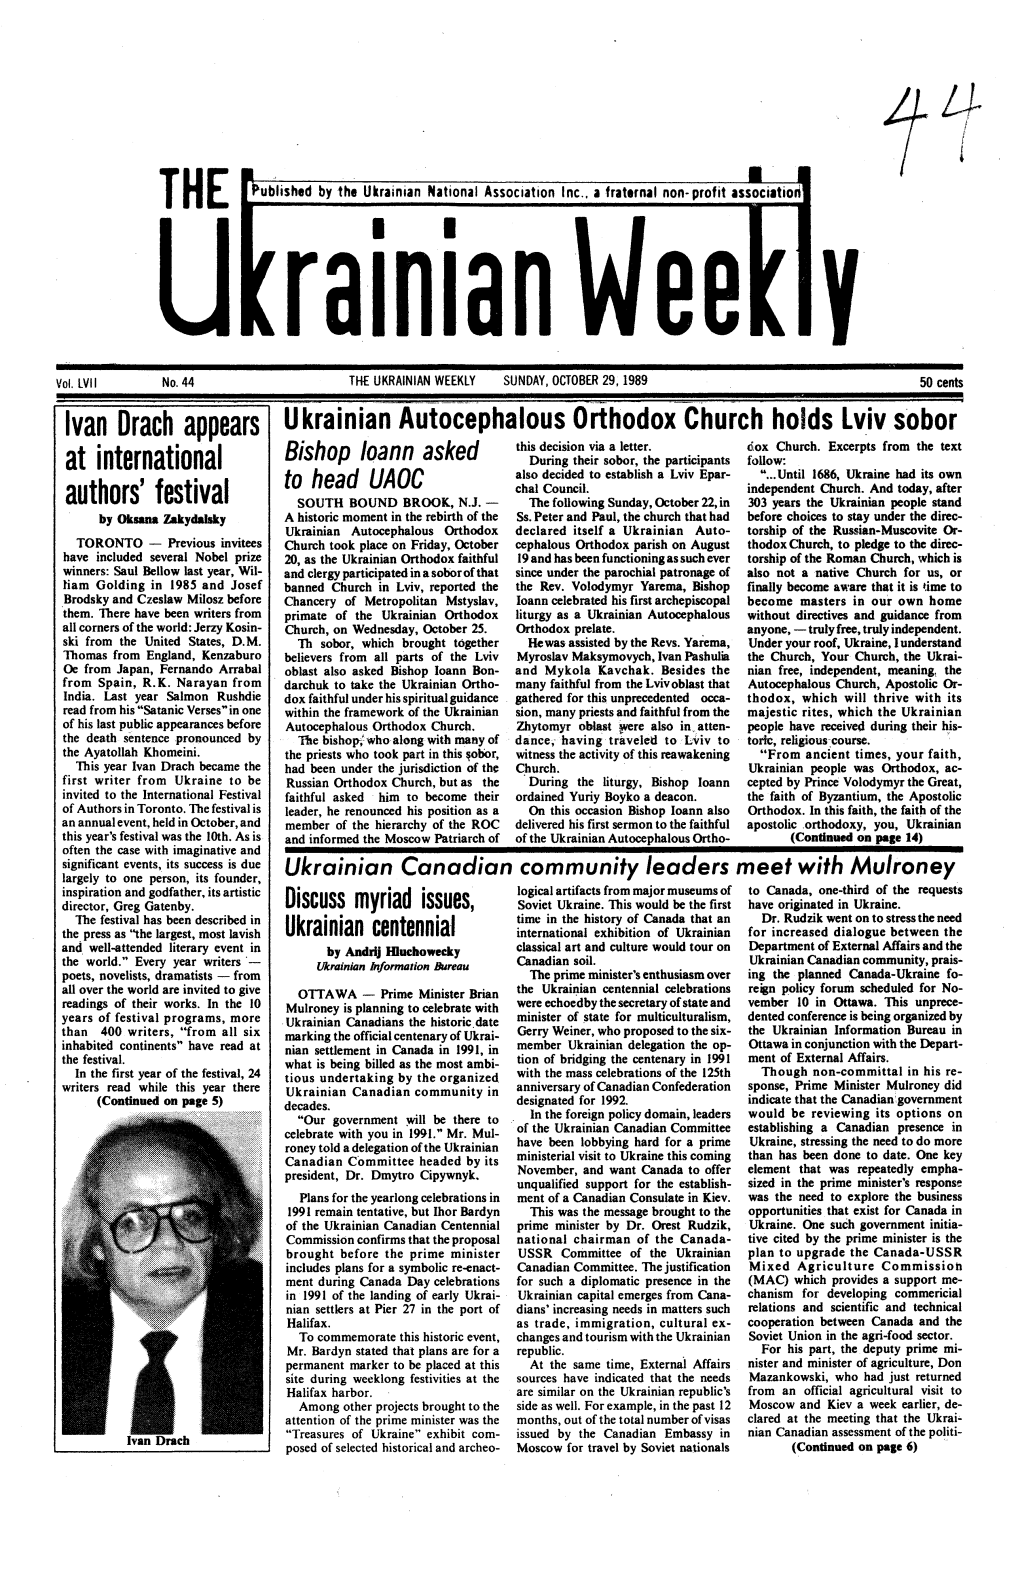 The Ukrainian Weekly 1989, No.44